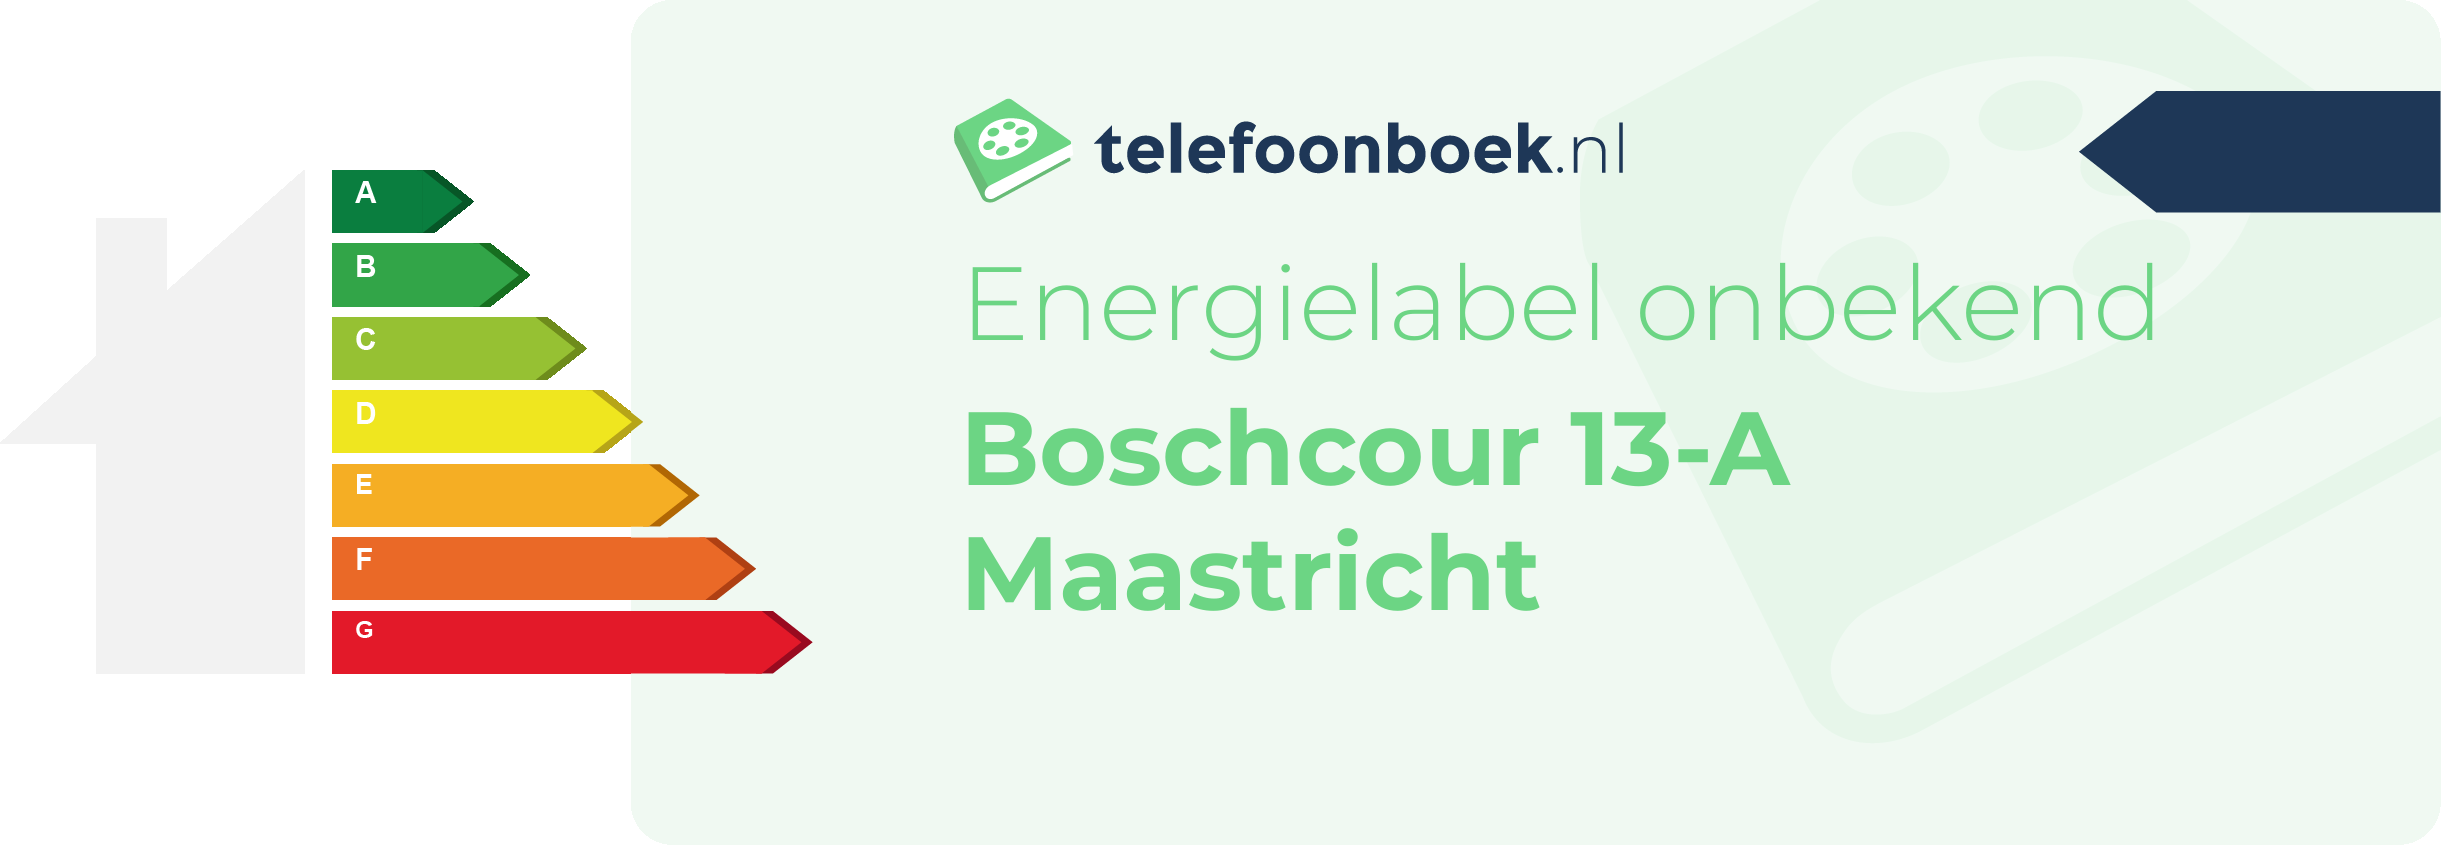 Energielabel Boschcour 13-A Maastricht